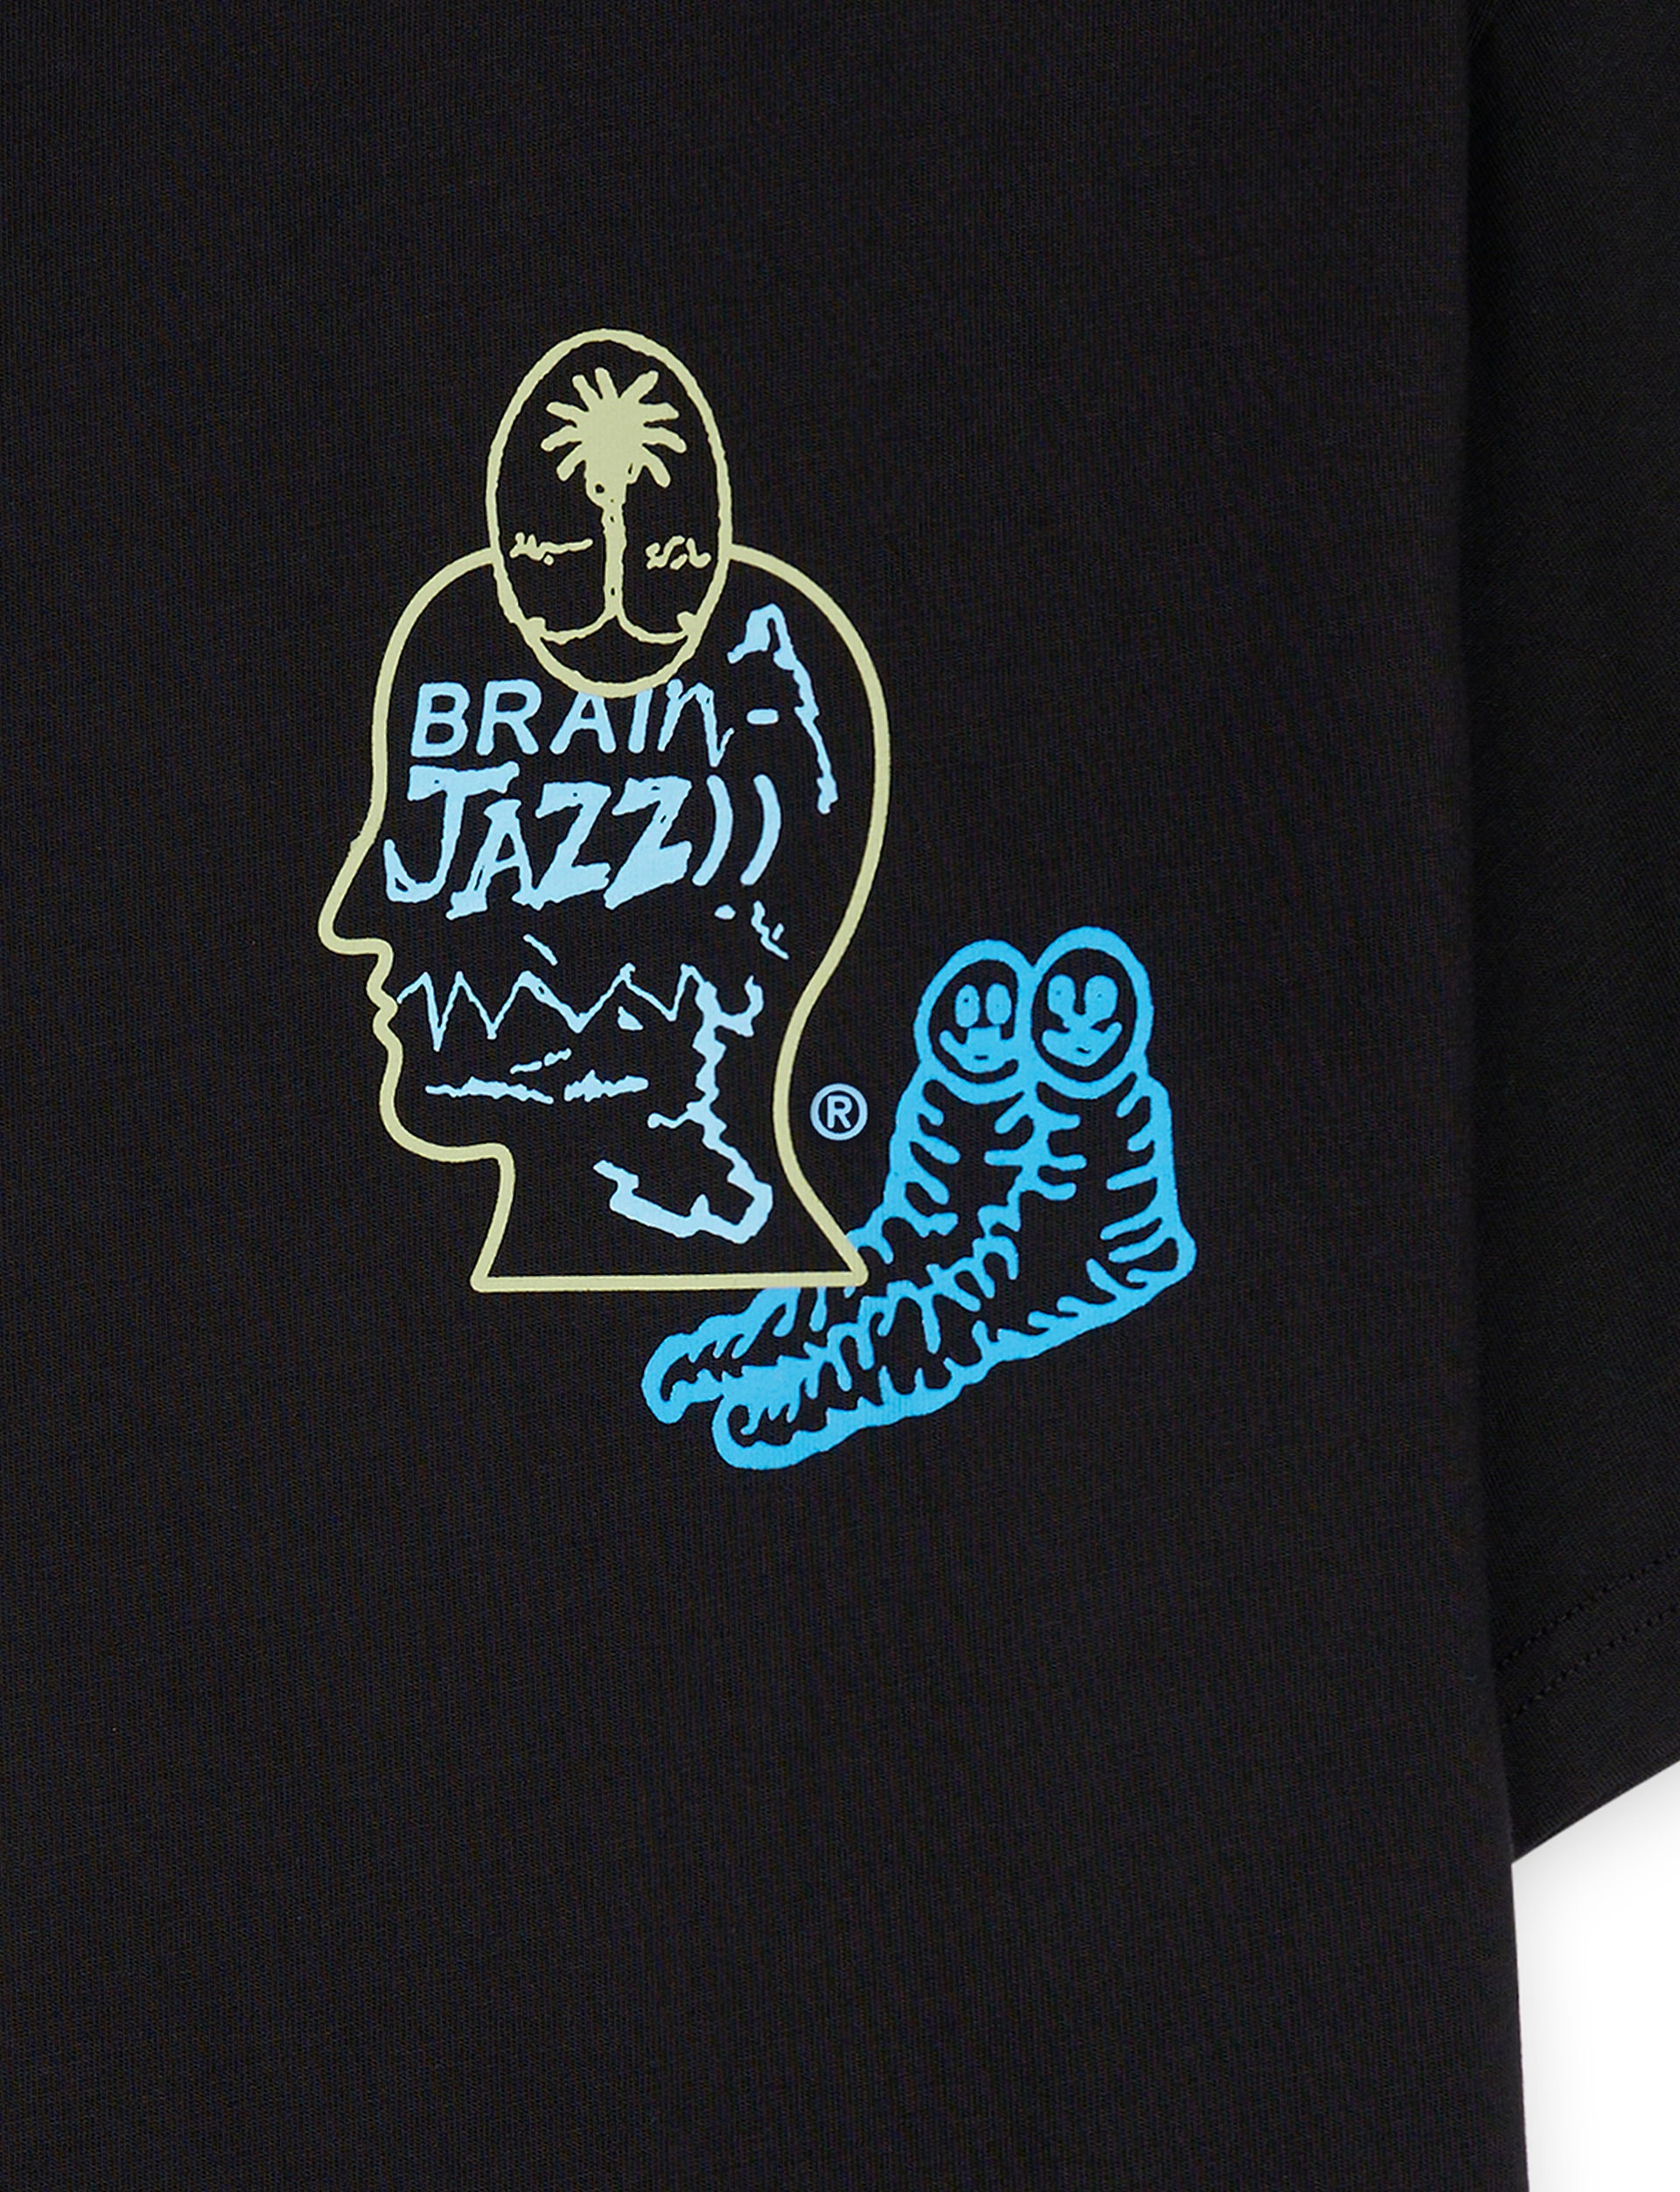 BRAIN DEAD Brain Jazz T-shirt Black